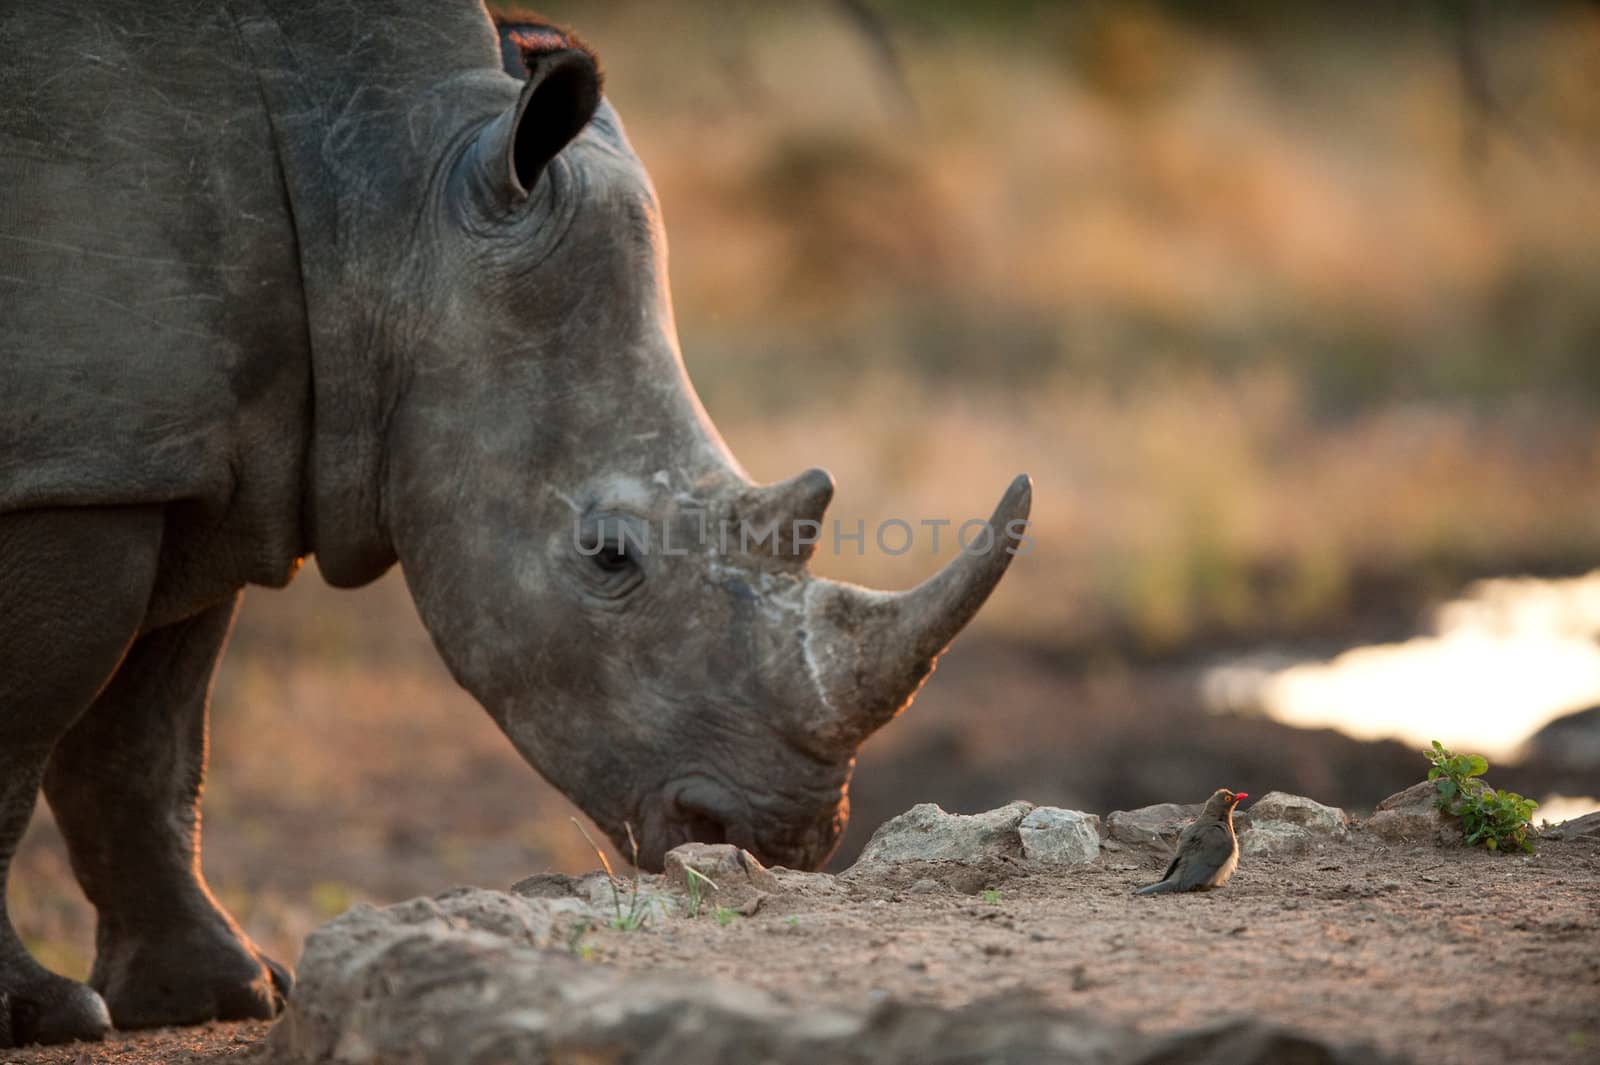 Rhino and tiny bird by edan